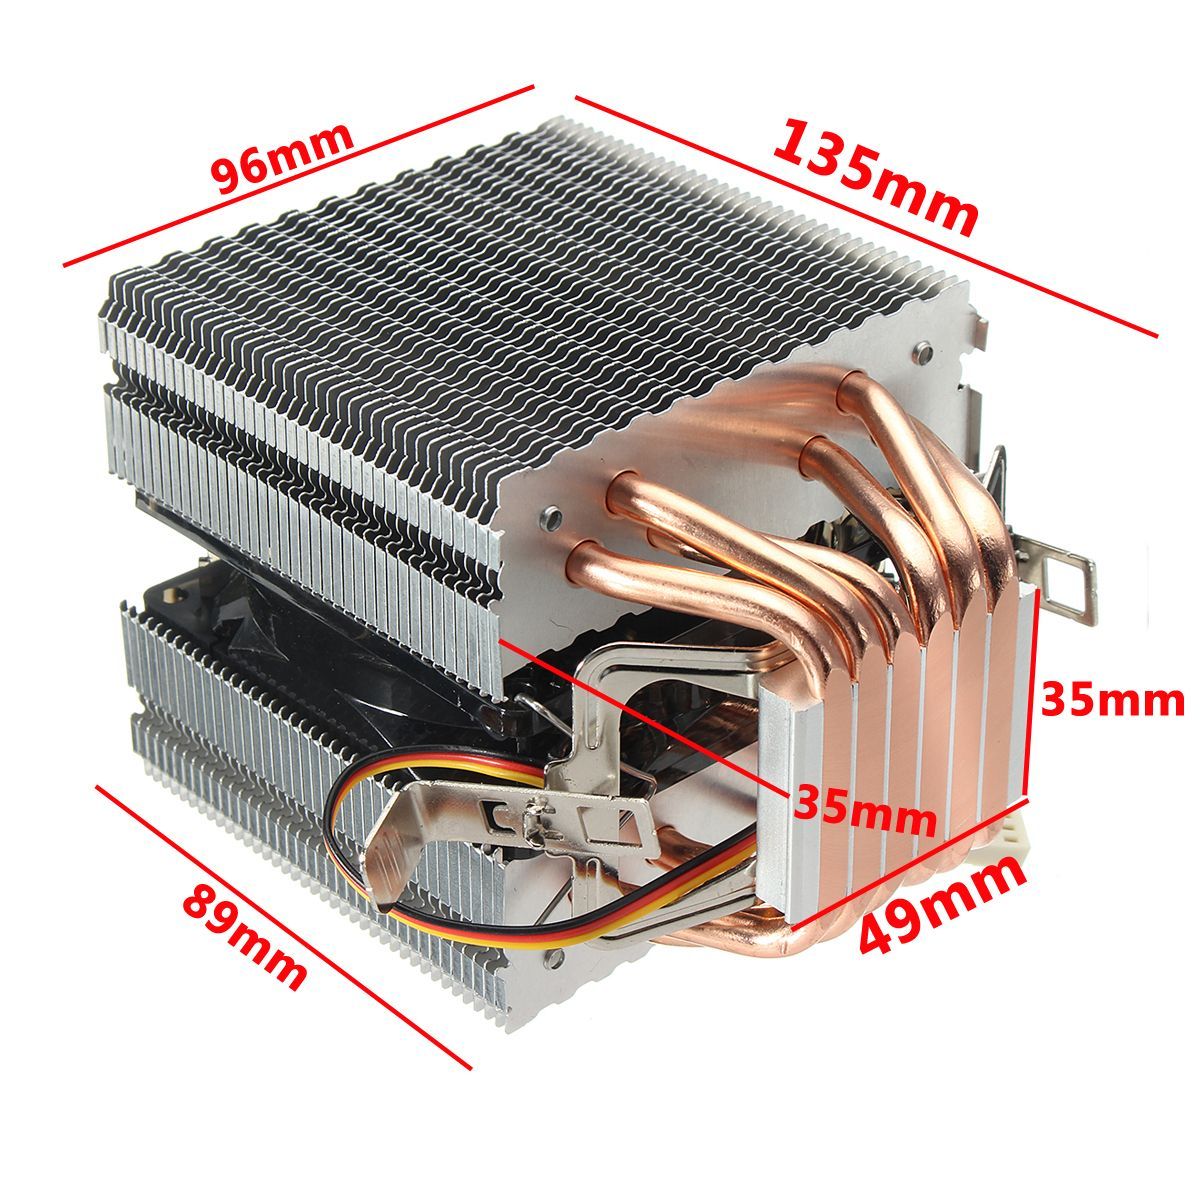 6-Heat-Pipes-Blue-LED-CPU-Cooling-Fan-Cooler-Heat-Sink-For-Intel-LAG-1155-1156-AMD-Socket-AM3AM2-1199943